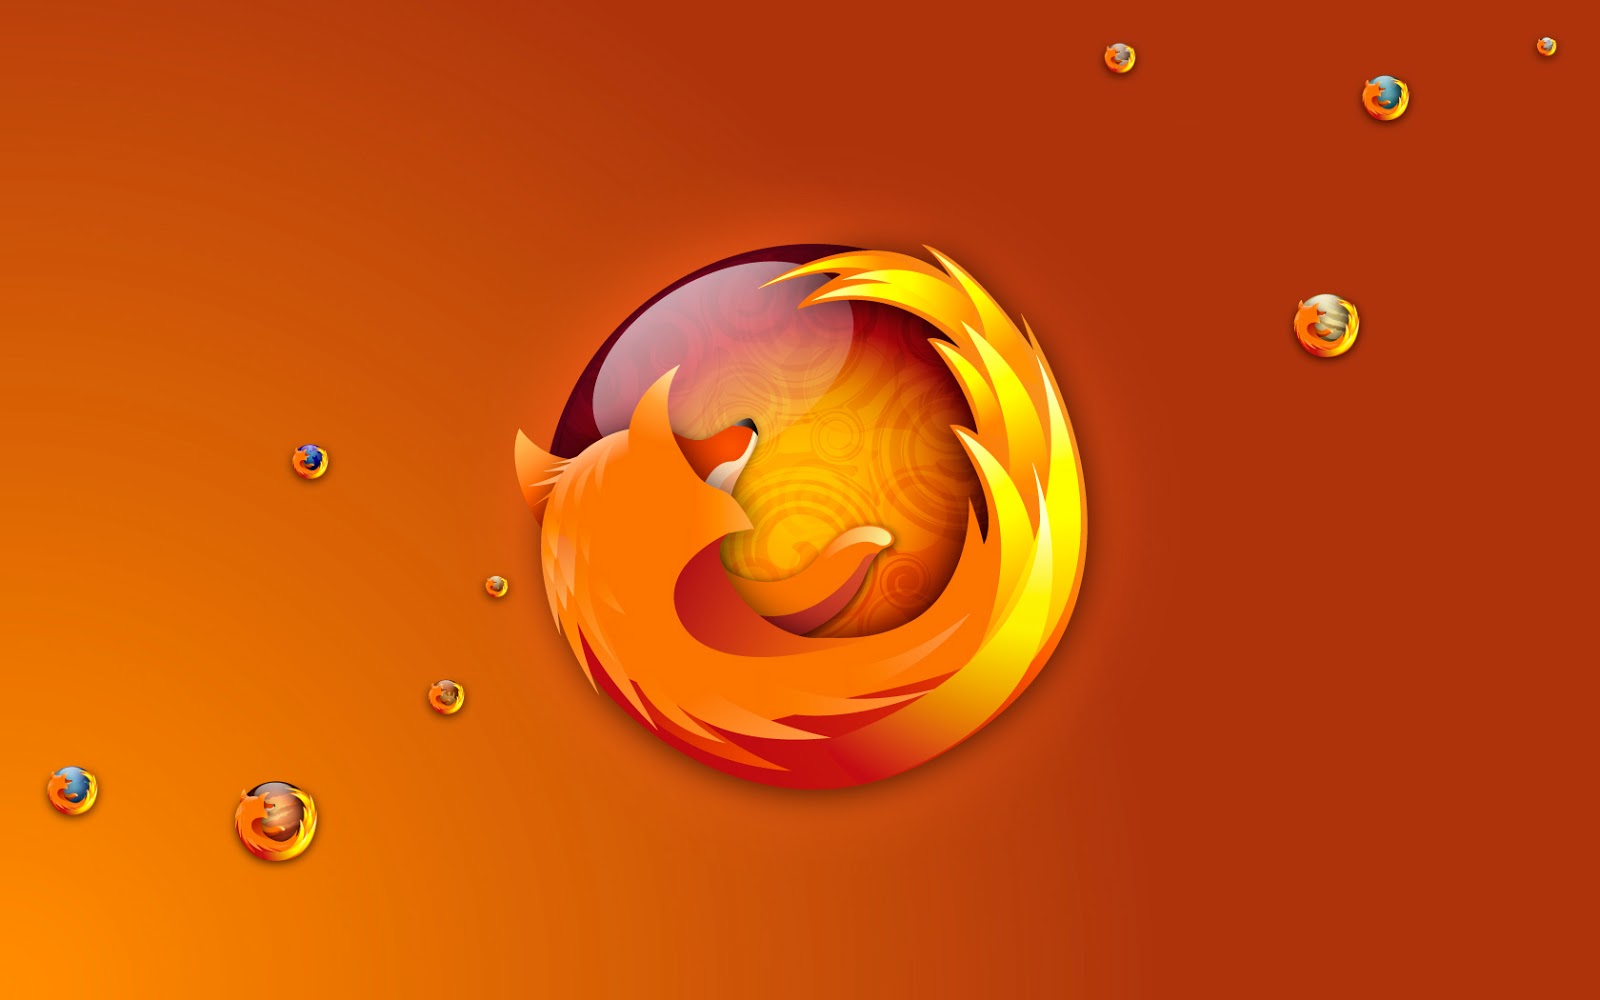 mozilla firefox desktop browser free download